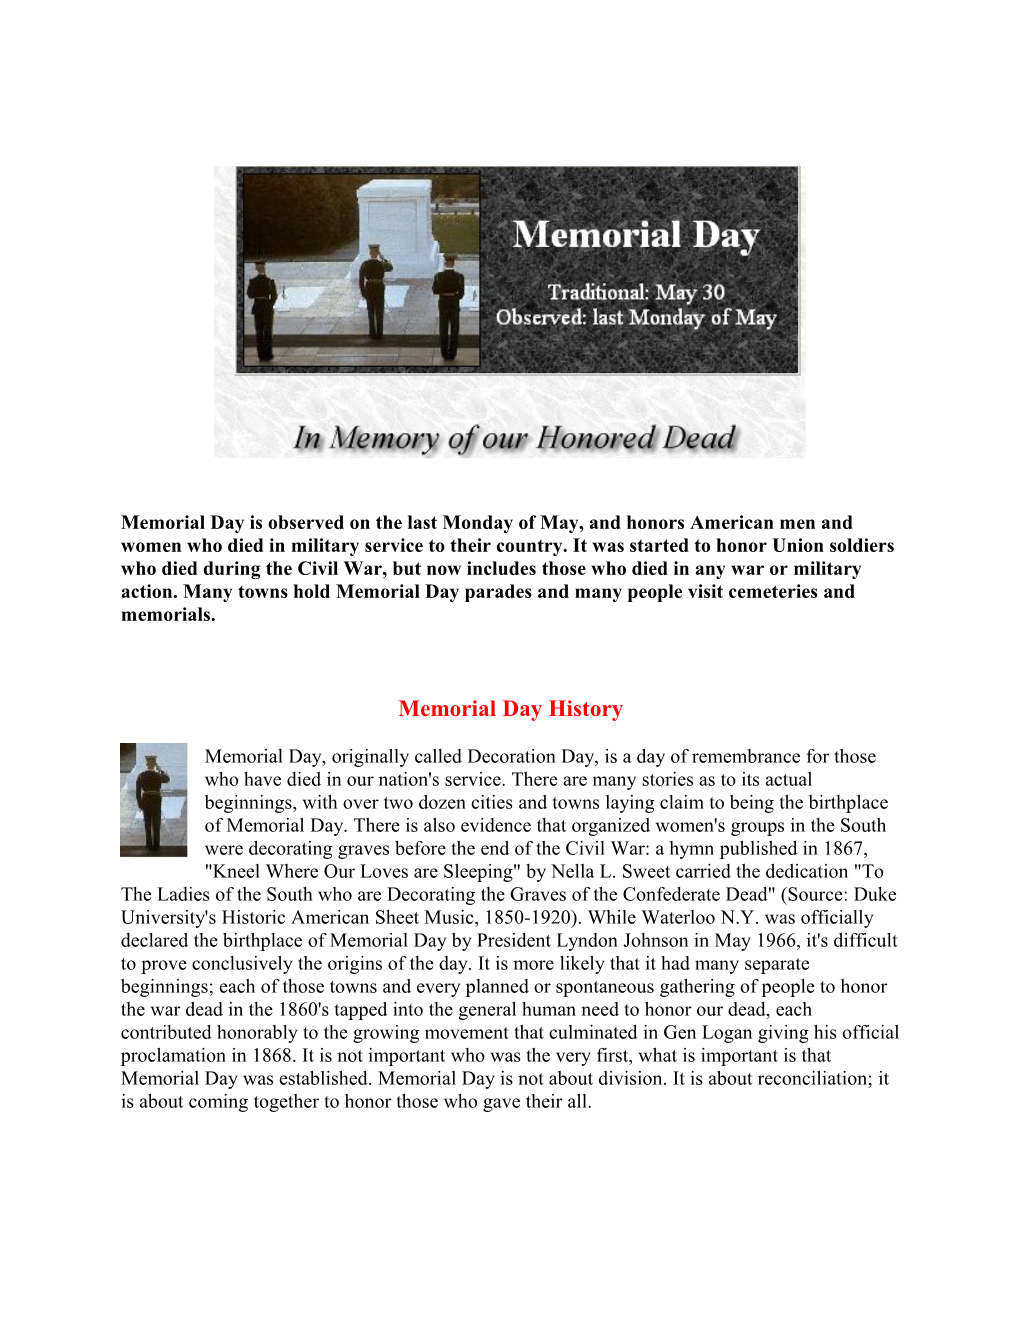 Memorial Day History